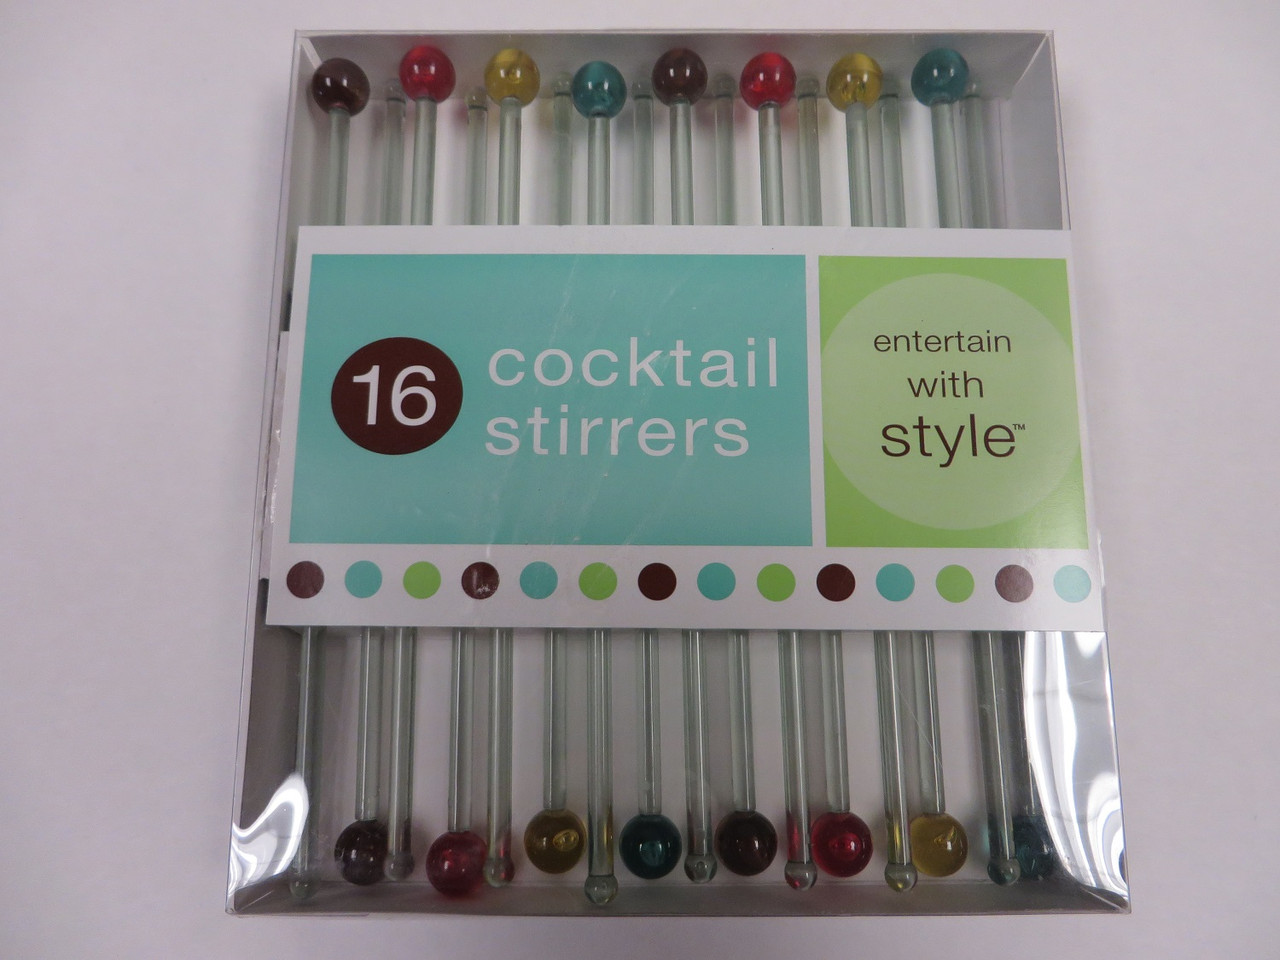 6'' Black Disc Stirrers Cocktail Swizzle Sticks (see quantity options)